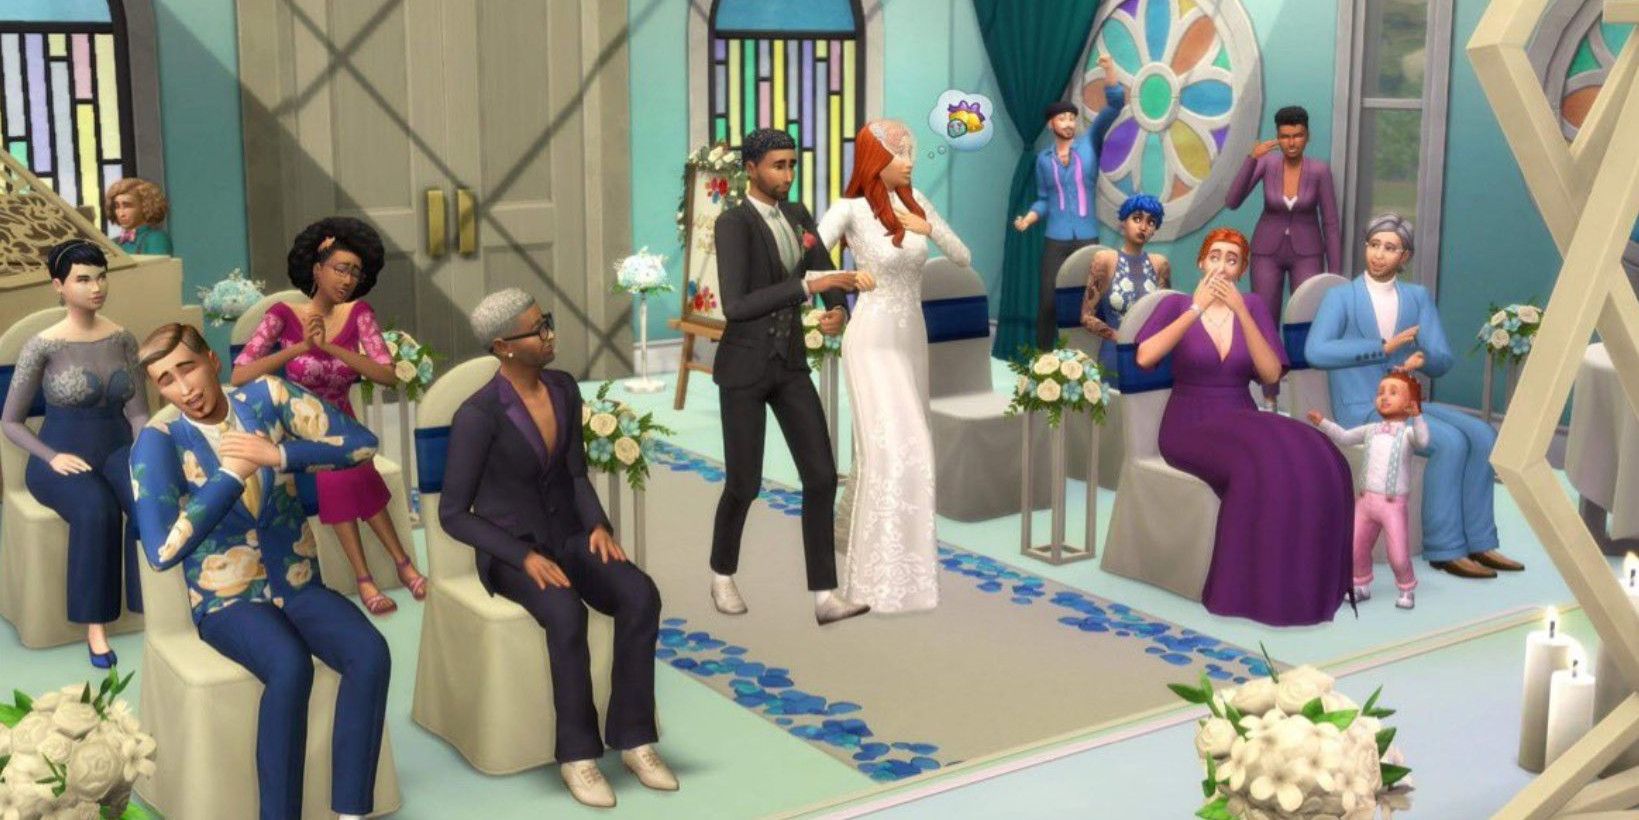 Sims 4 Wedding Pack Leaked Photo